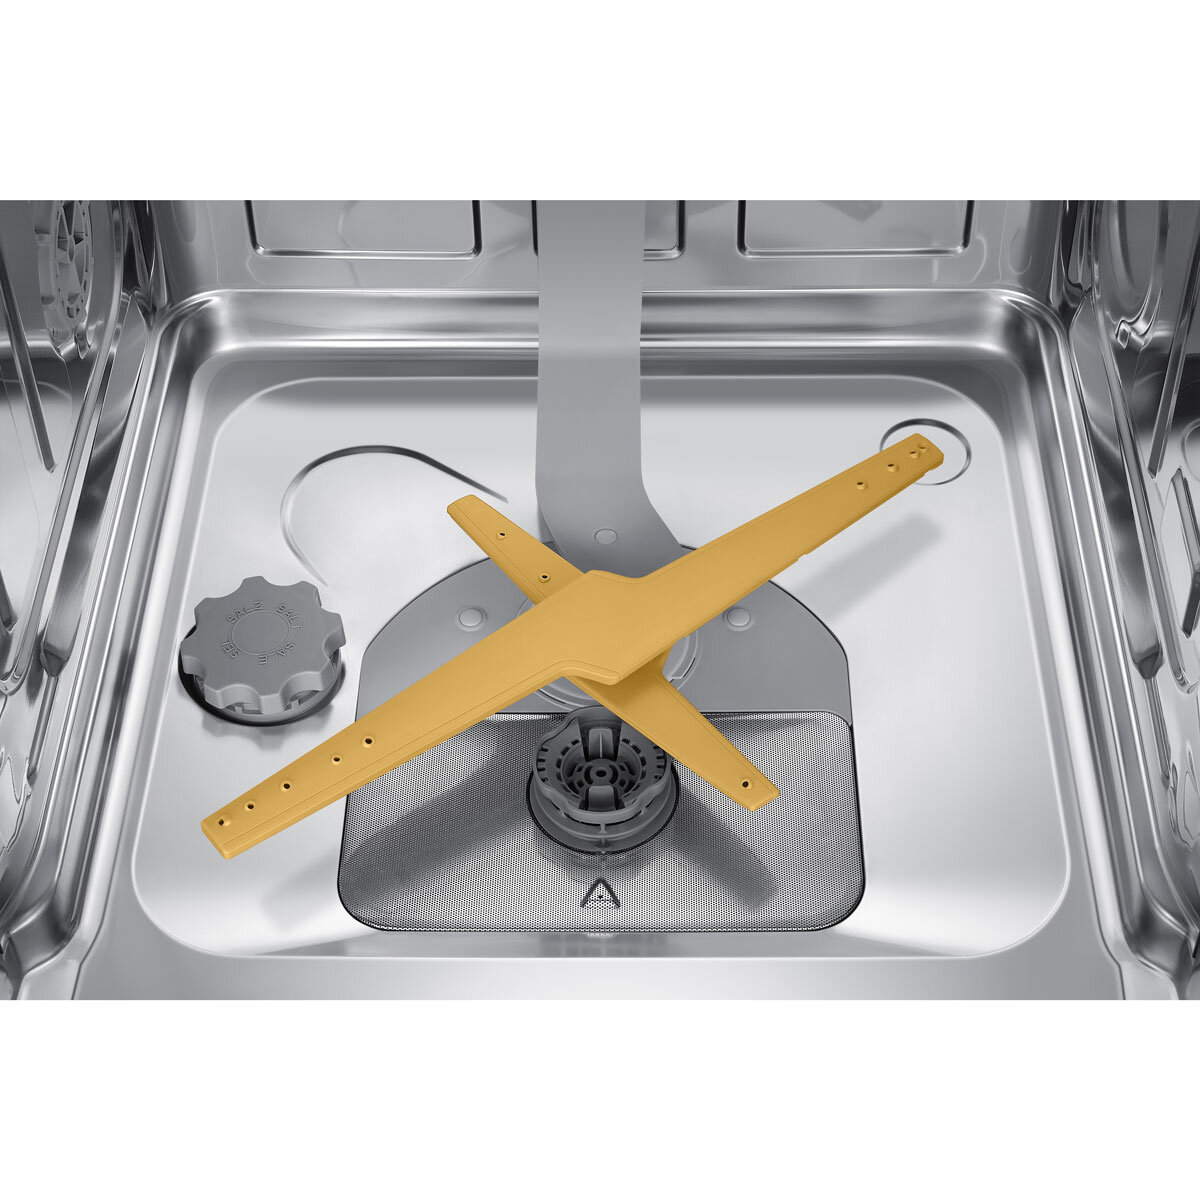 detailed jets in dishwasher